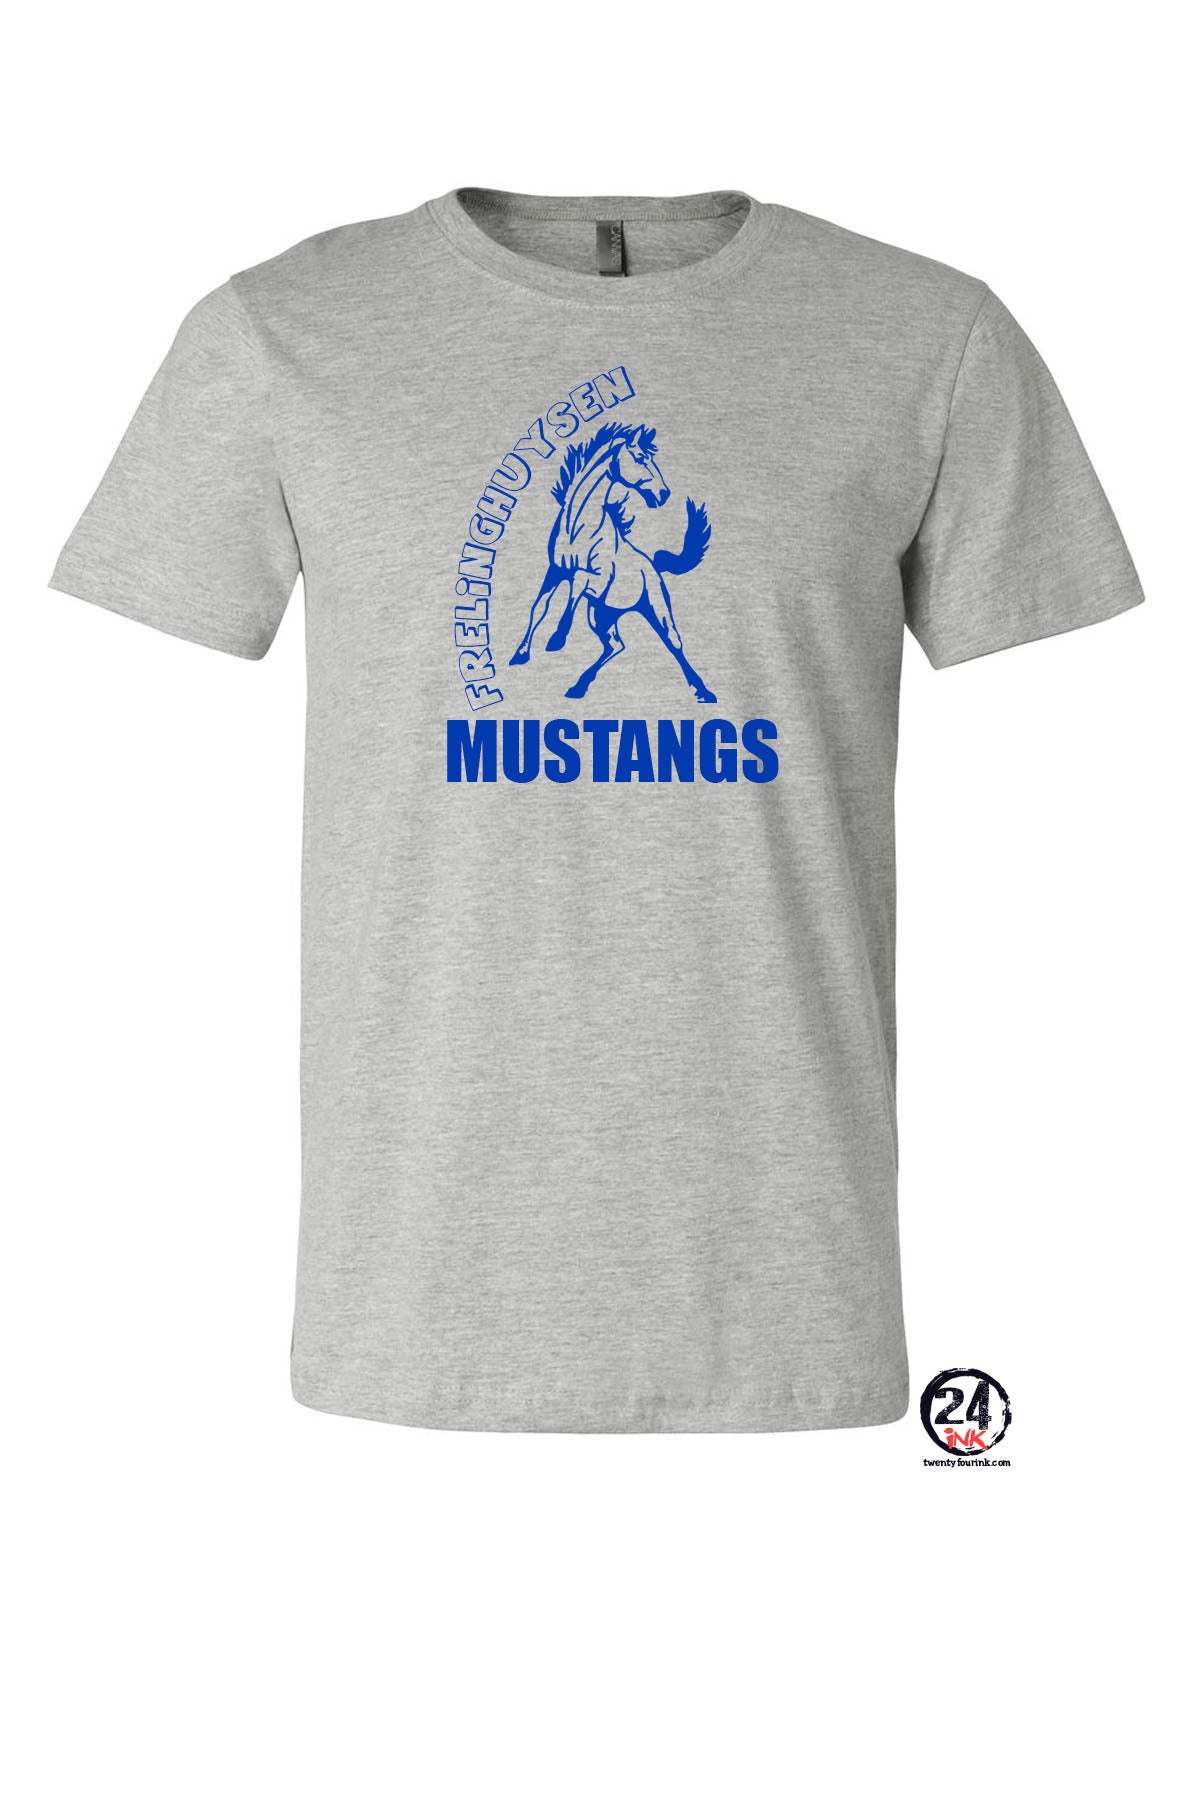 Mustangs design 4 t-Shirt